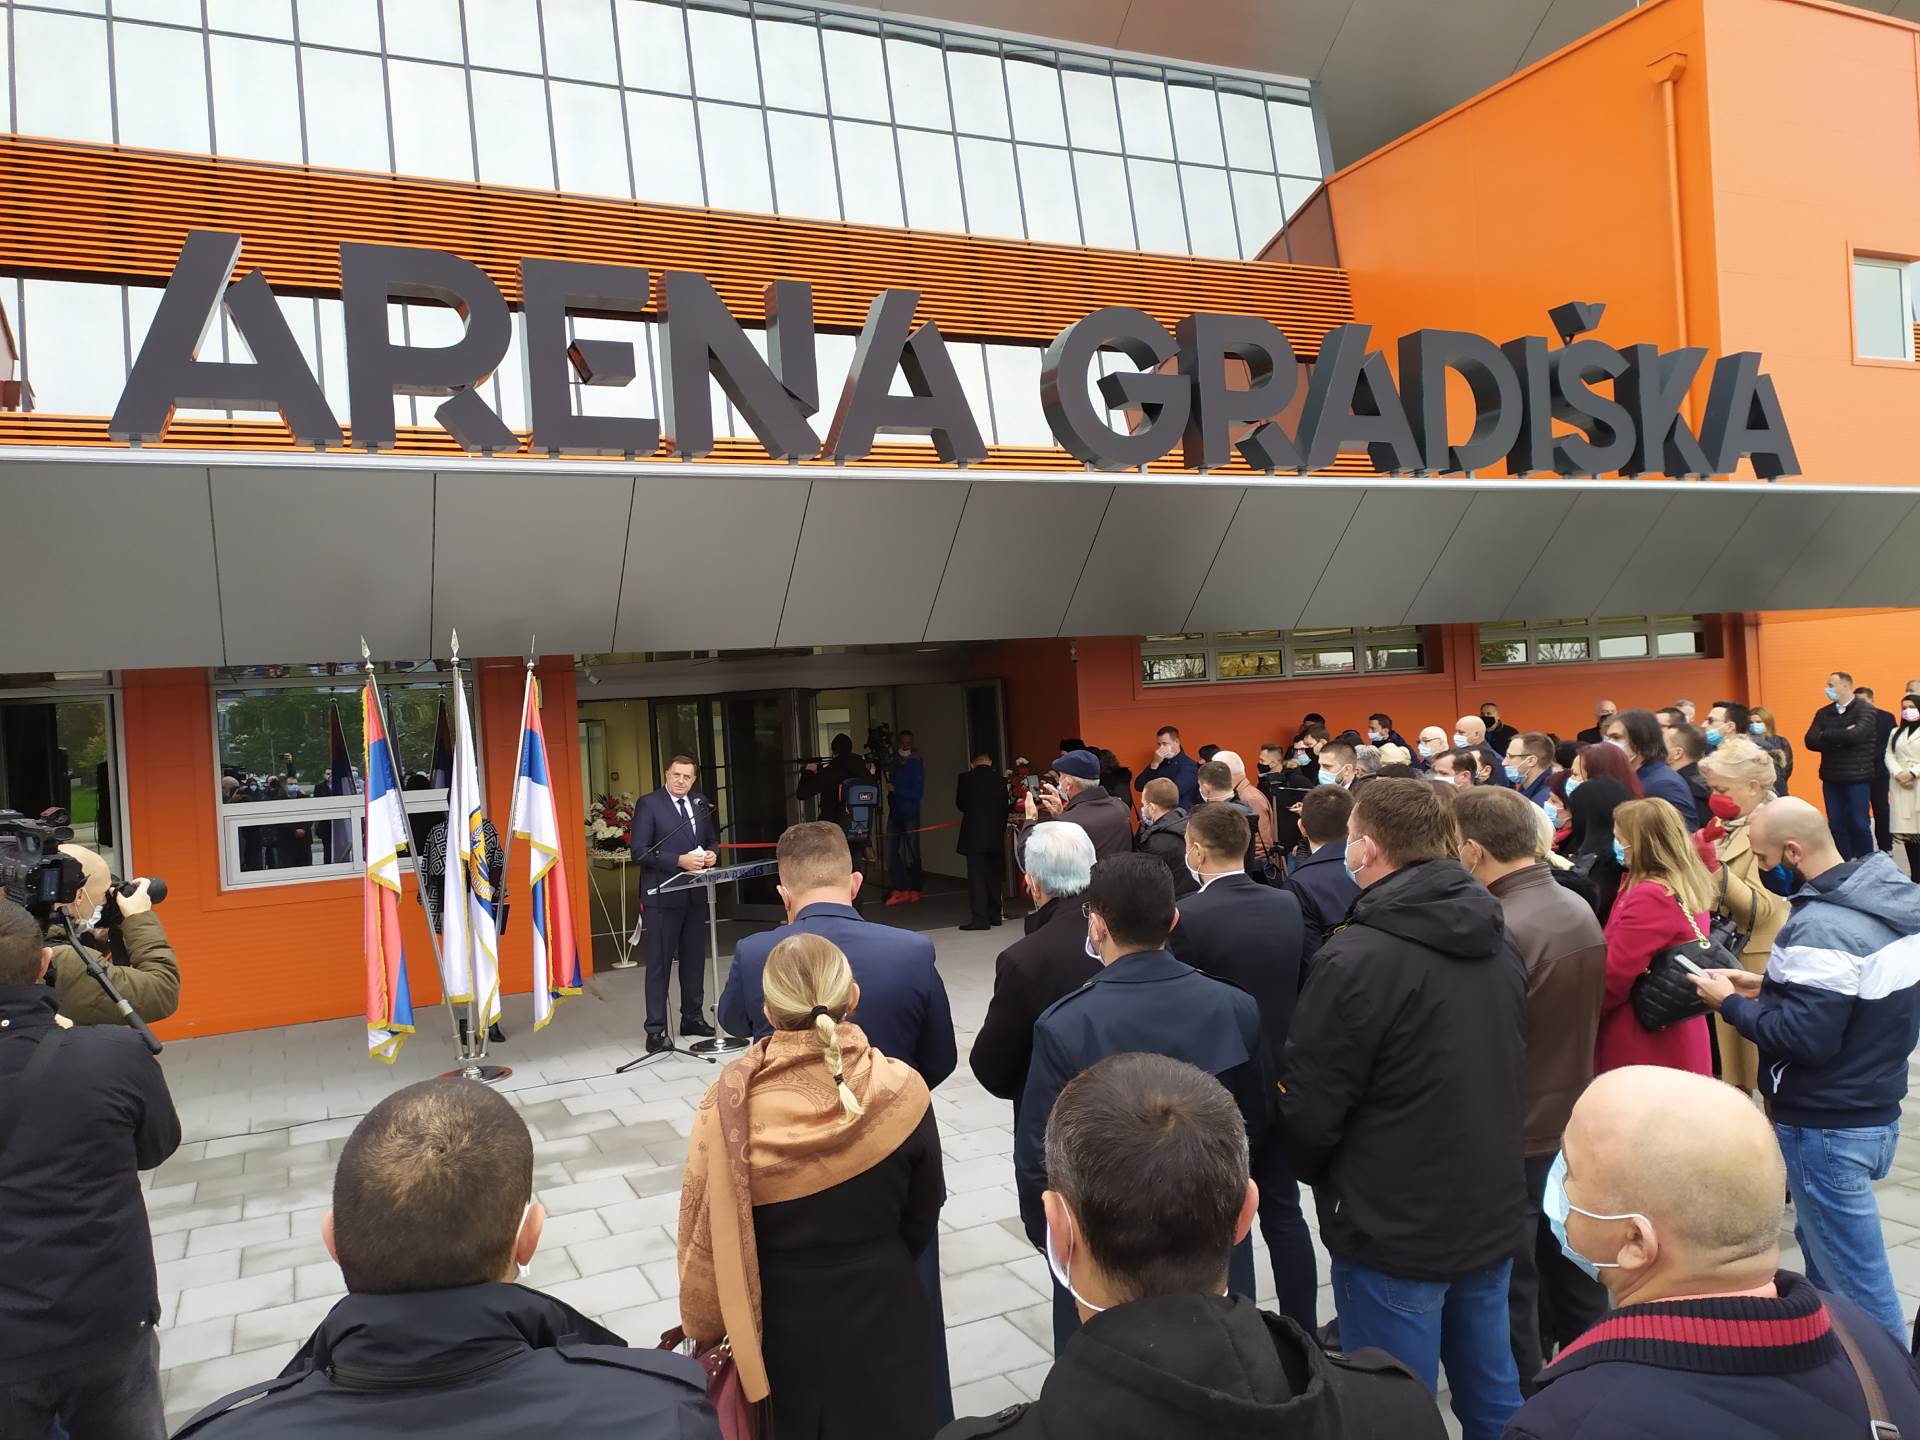  Gradiška Arena Milorad Dodik 